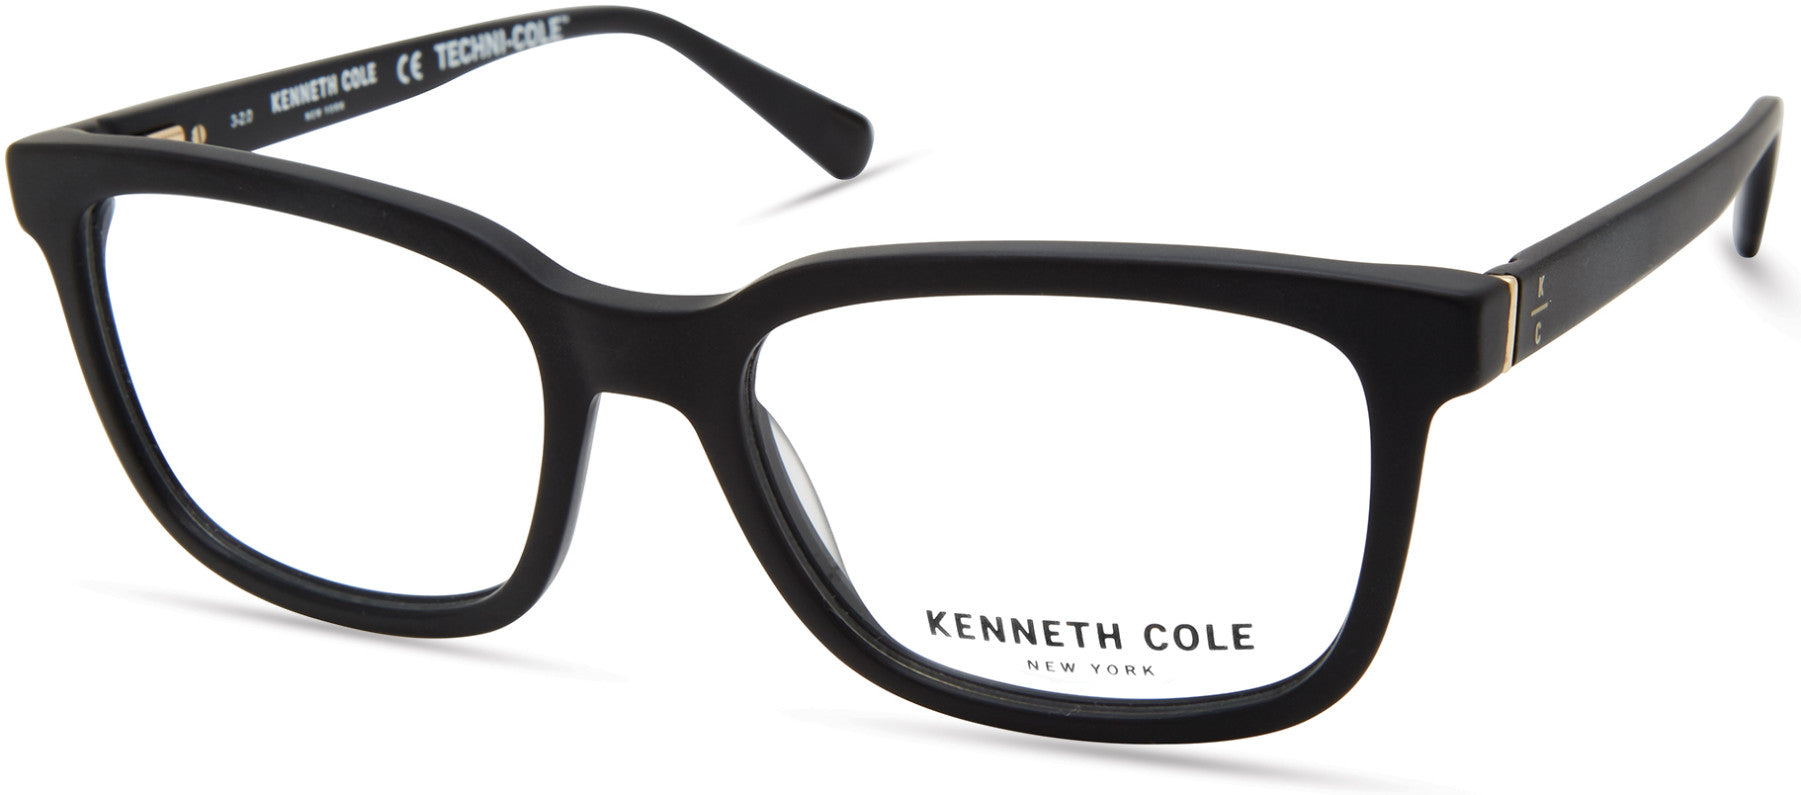 Kenneth Cole New York,Kenneth Cole Reaction KC0320 Square Eyeglasses 002-002 - Matte Black